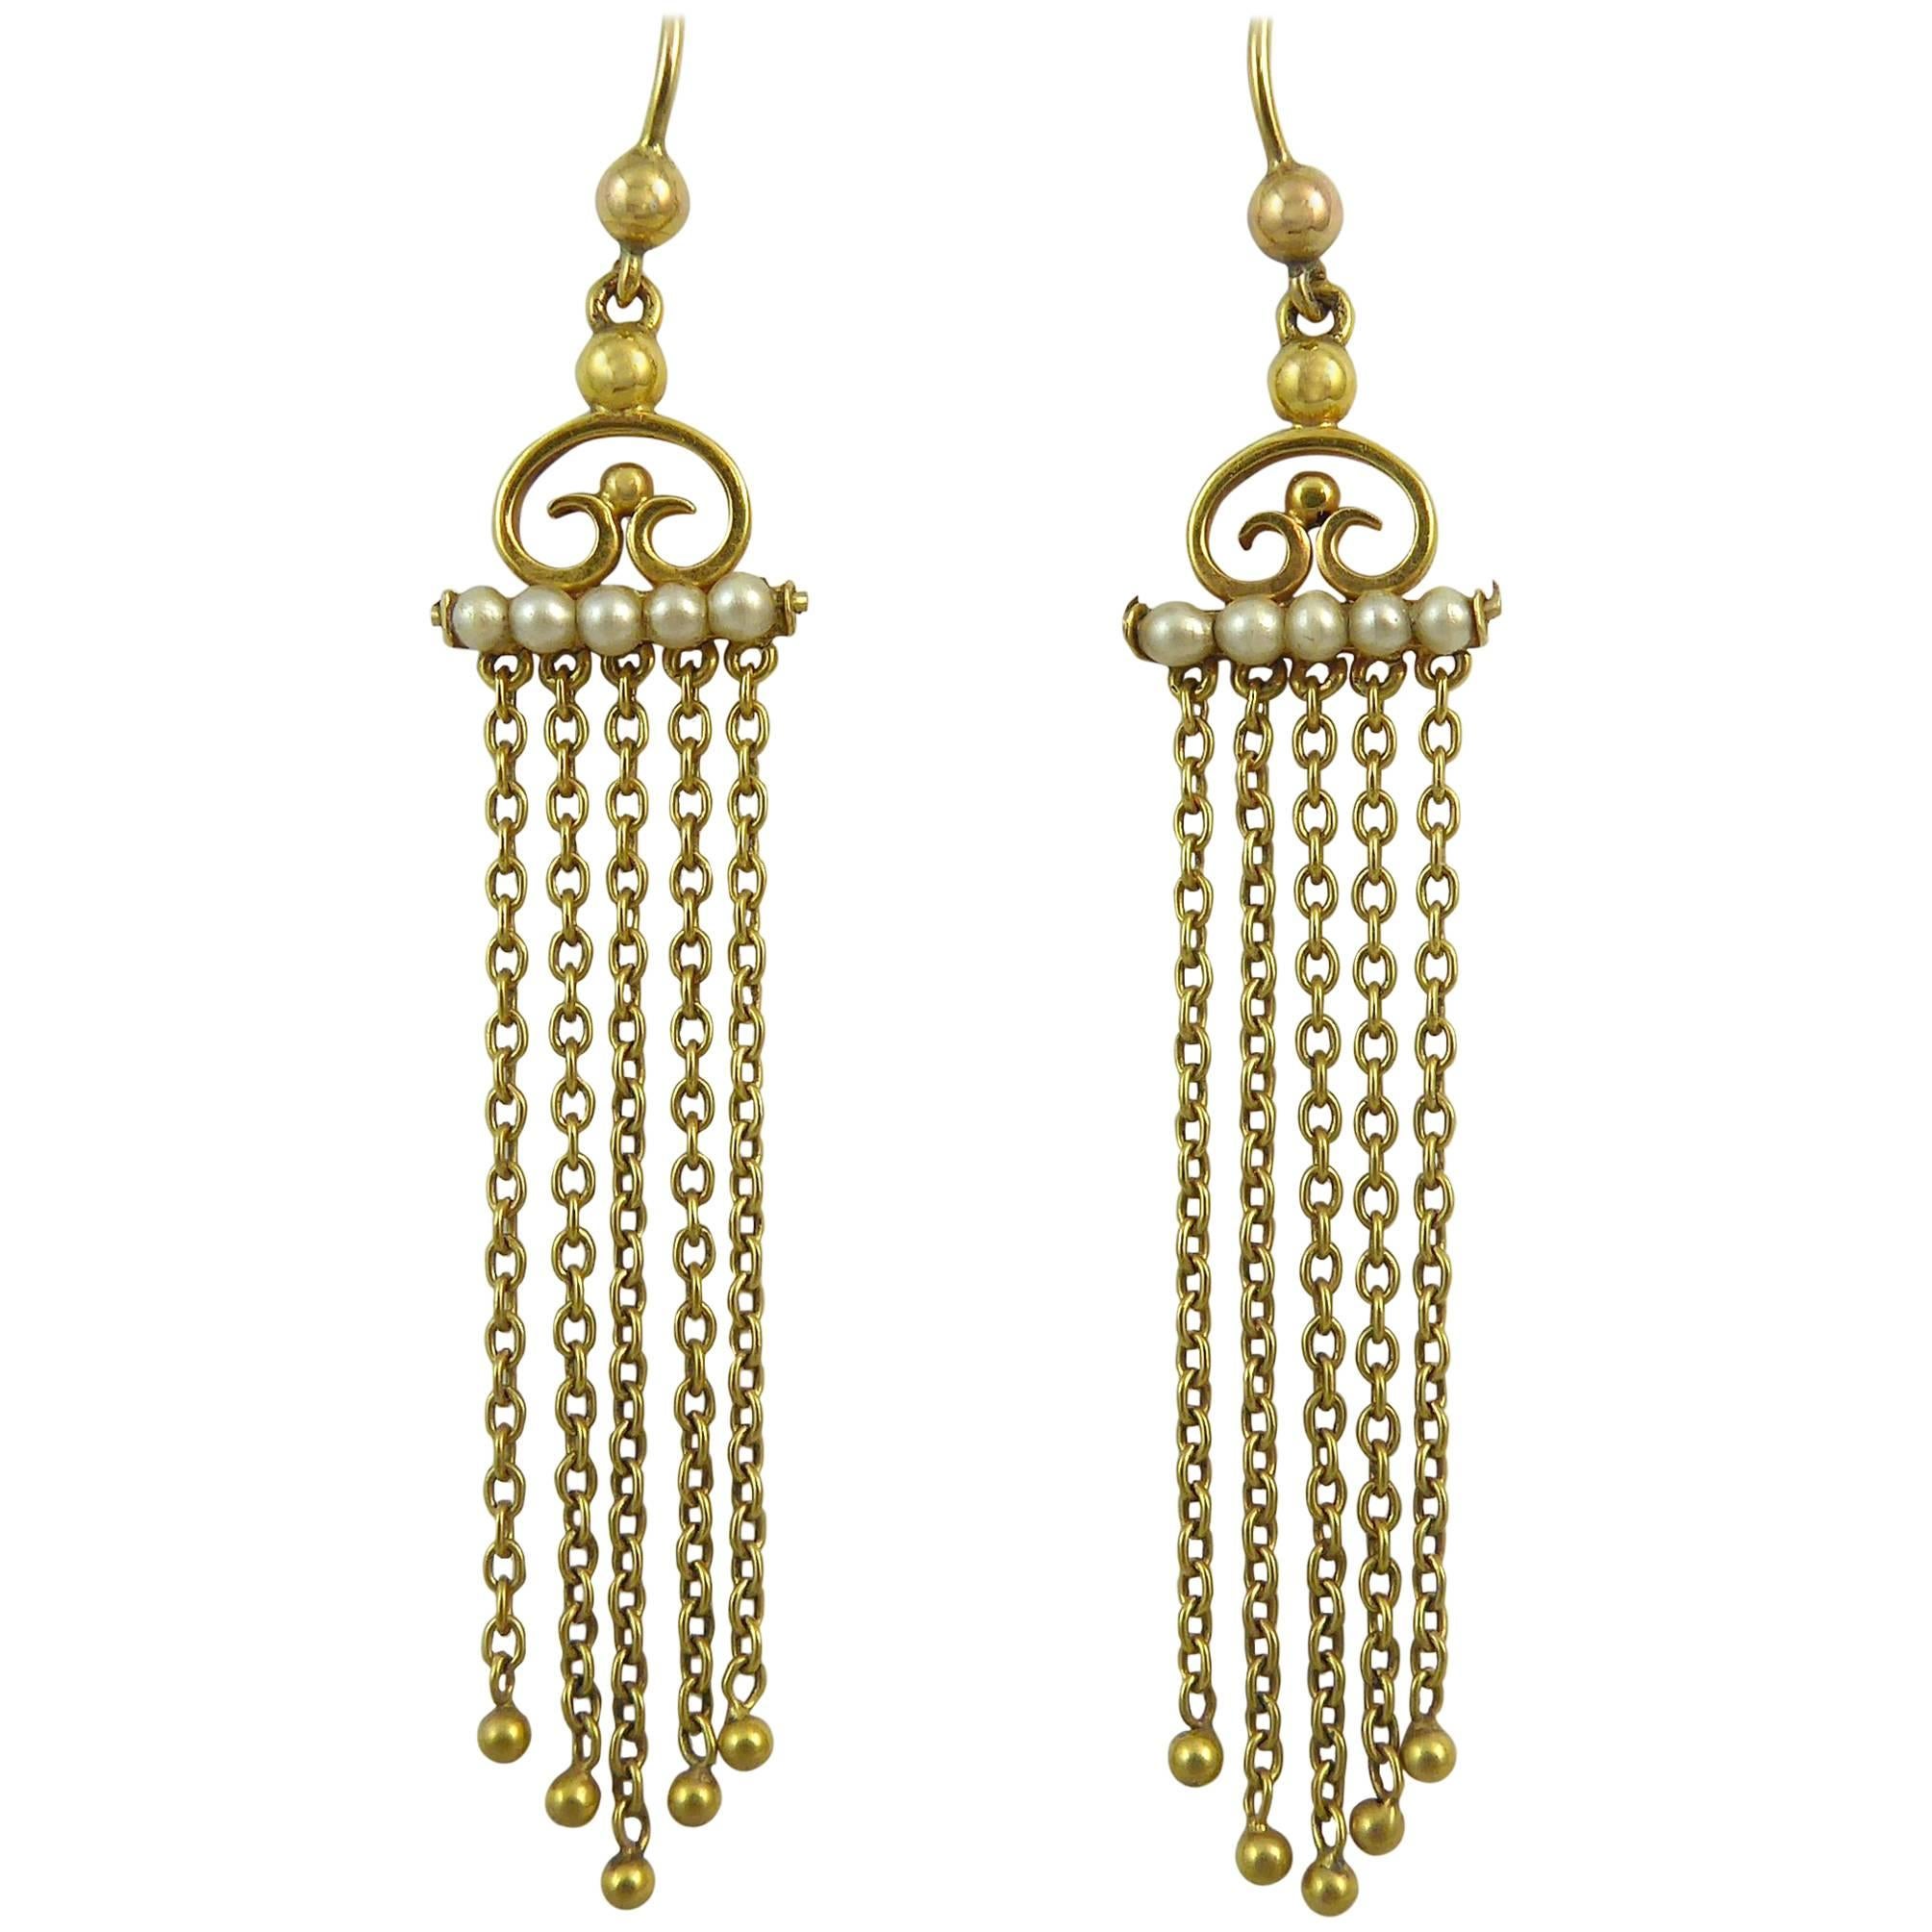 Edwardian Drop Earrings with Pearls, 9 Carat Gold